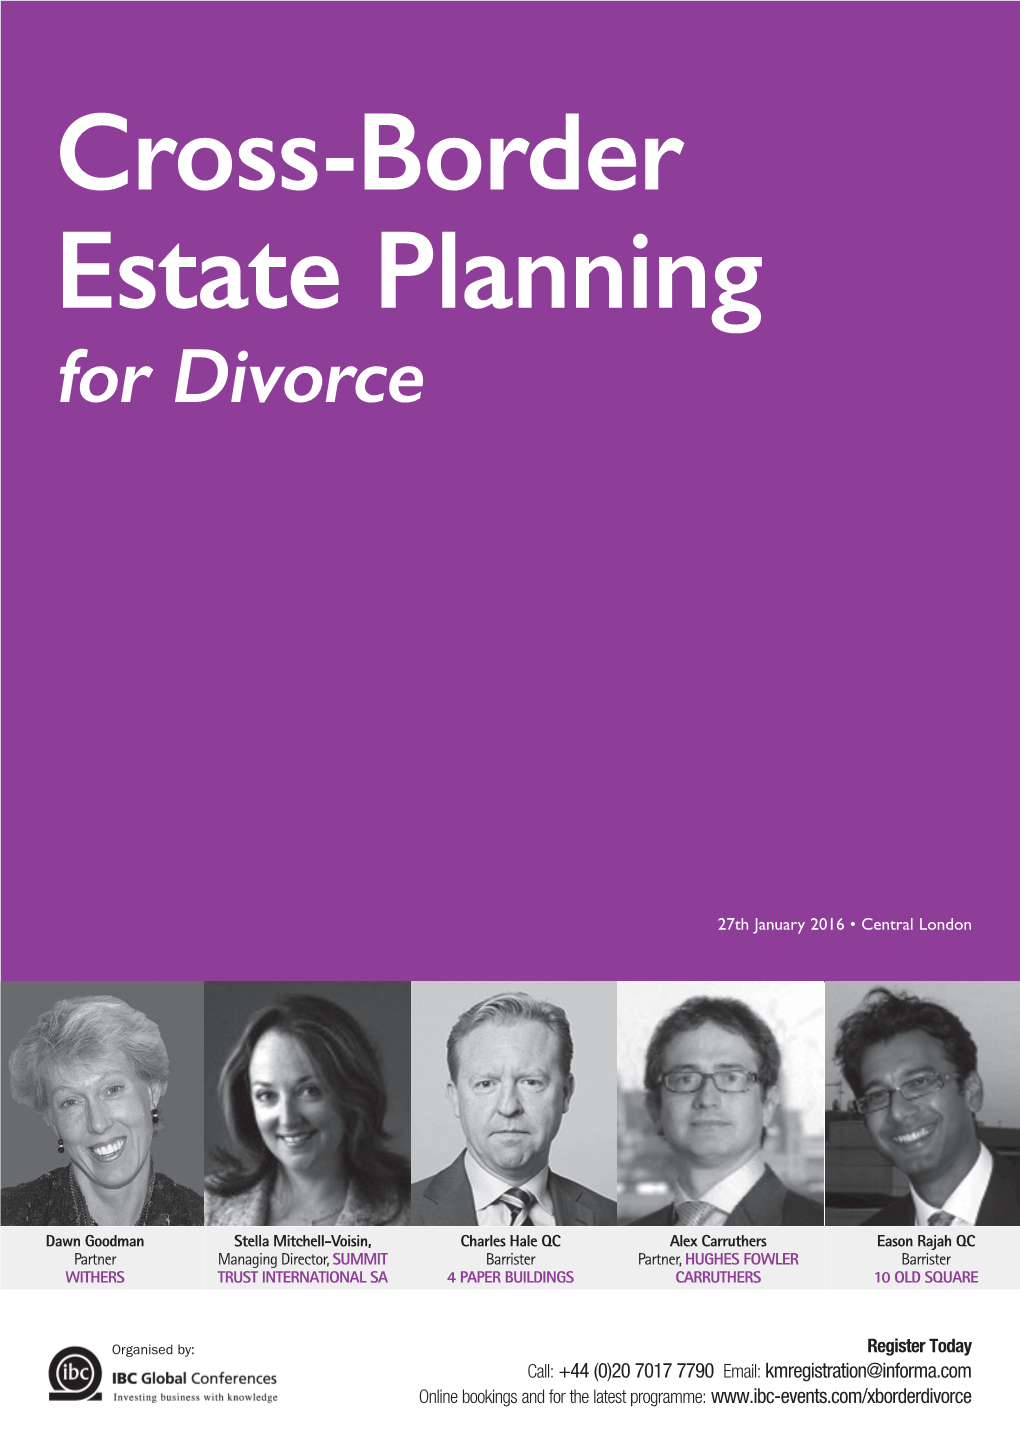 Cross-Border Estate Planning for Divorce